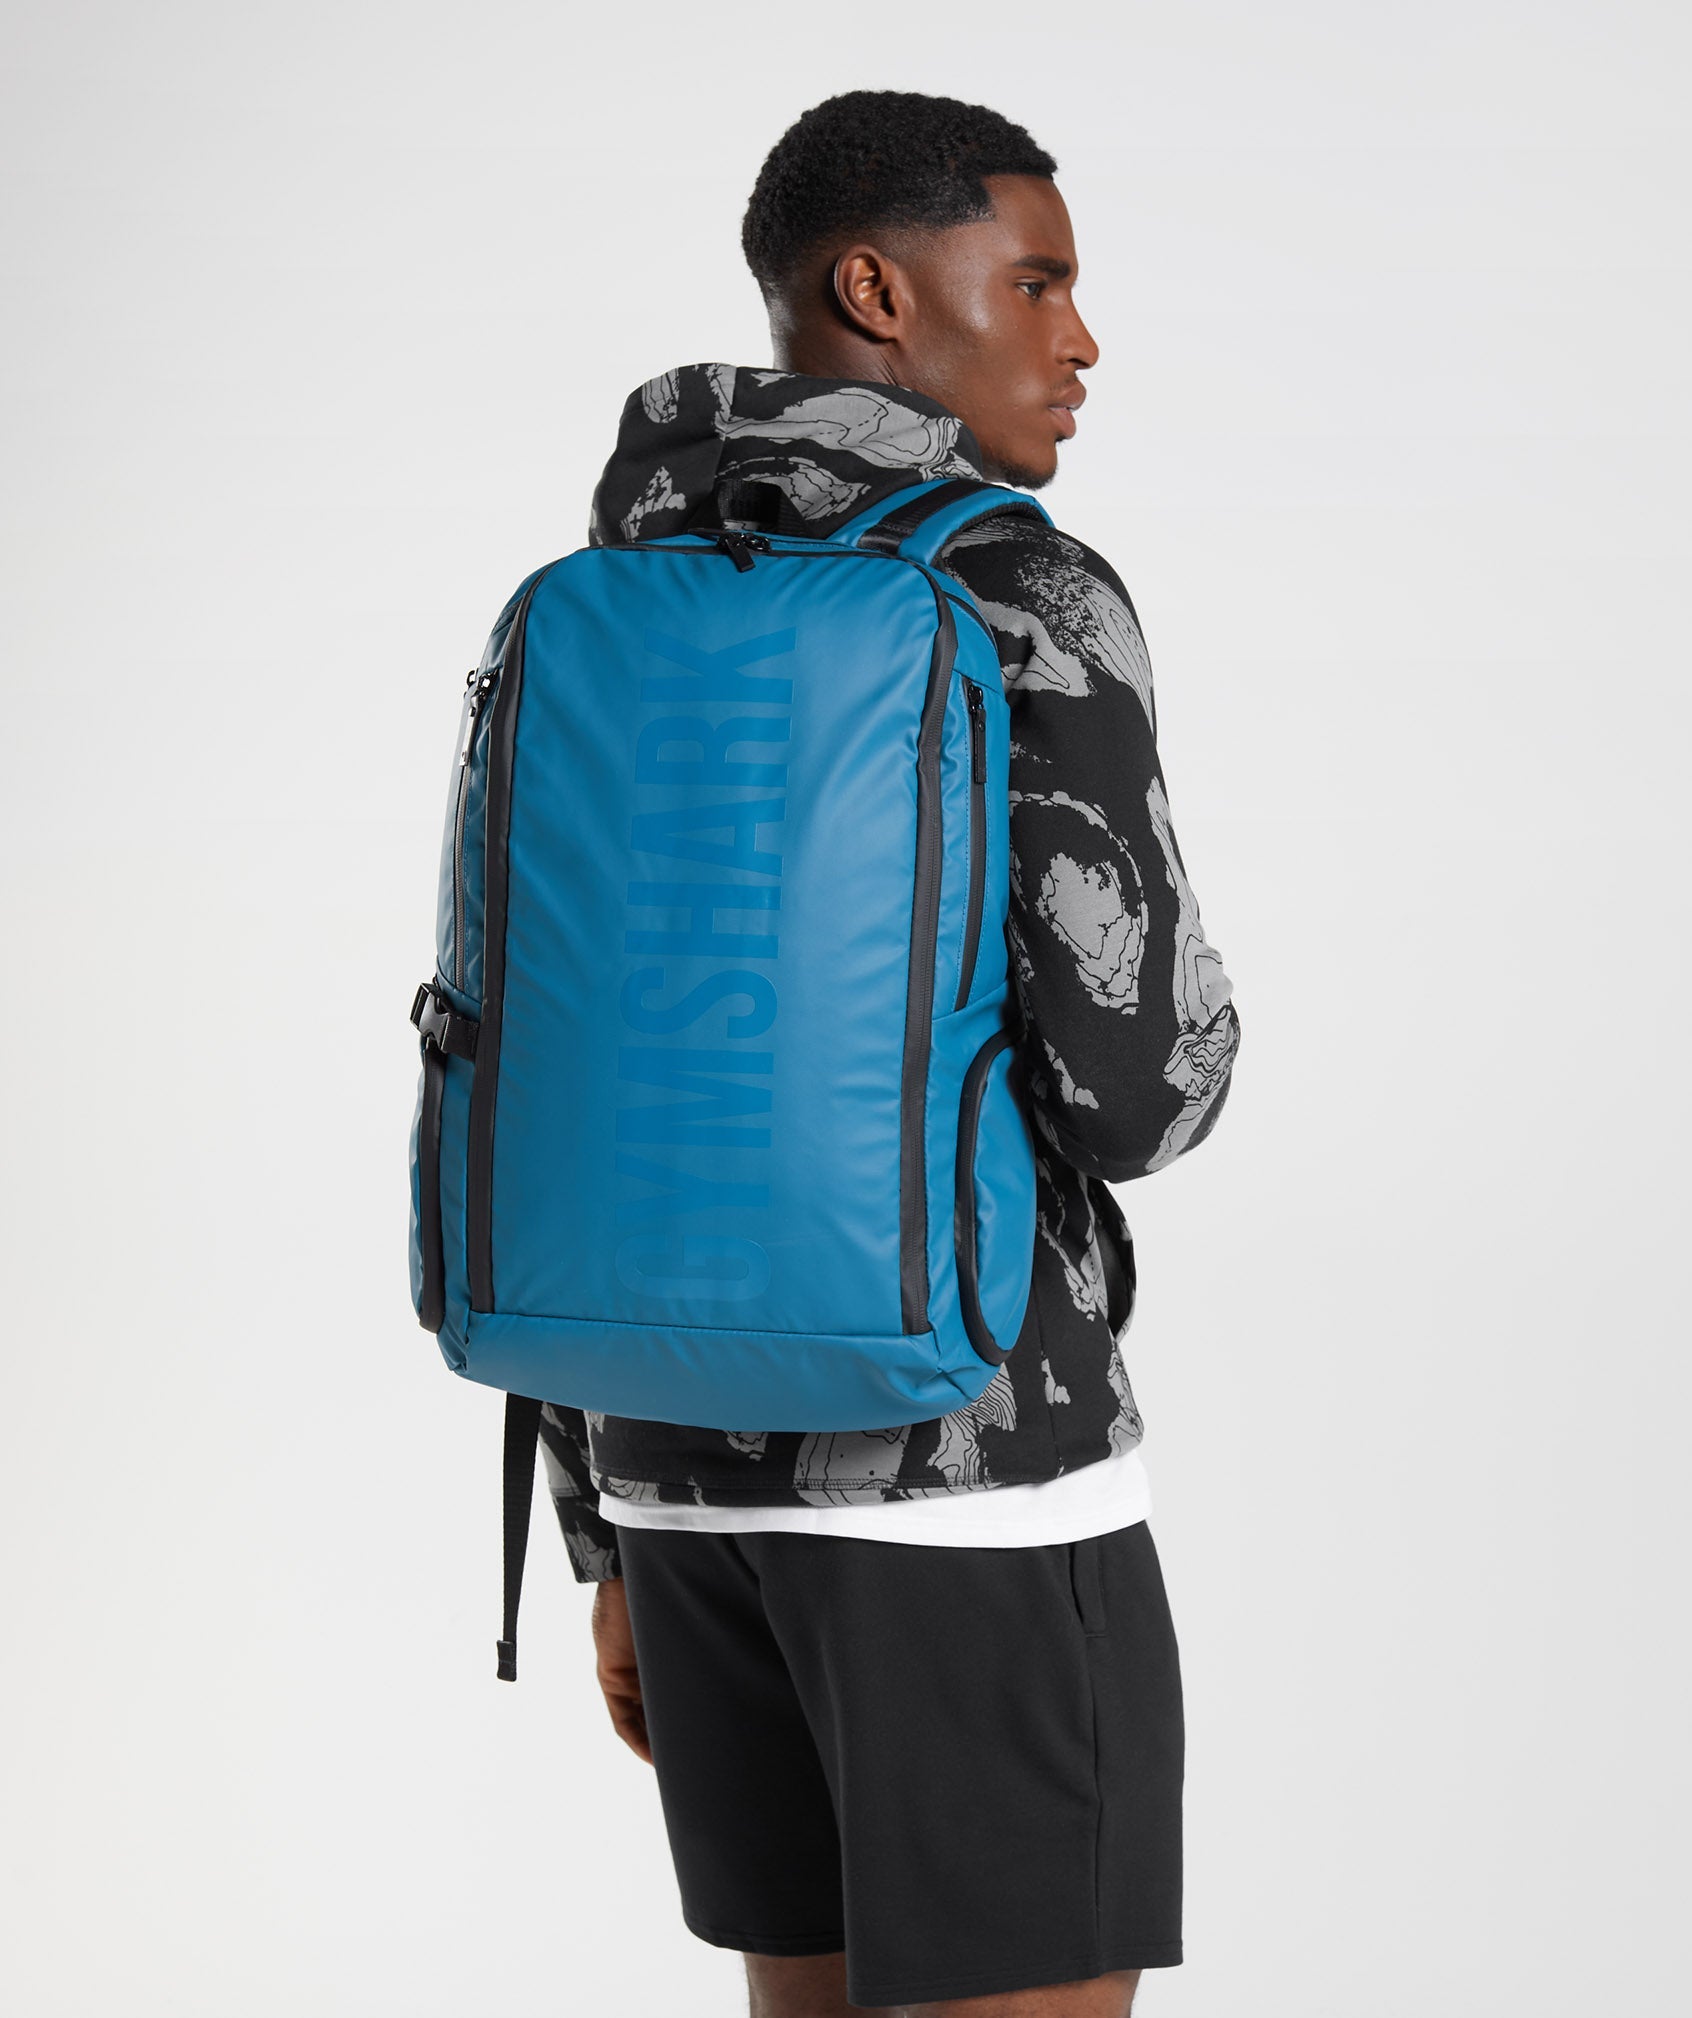 X-Series Bag 0.3 in Lakeside Blue